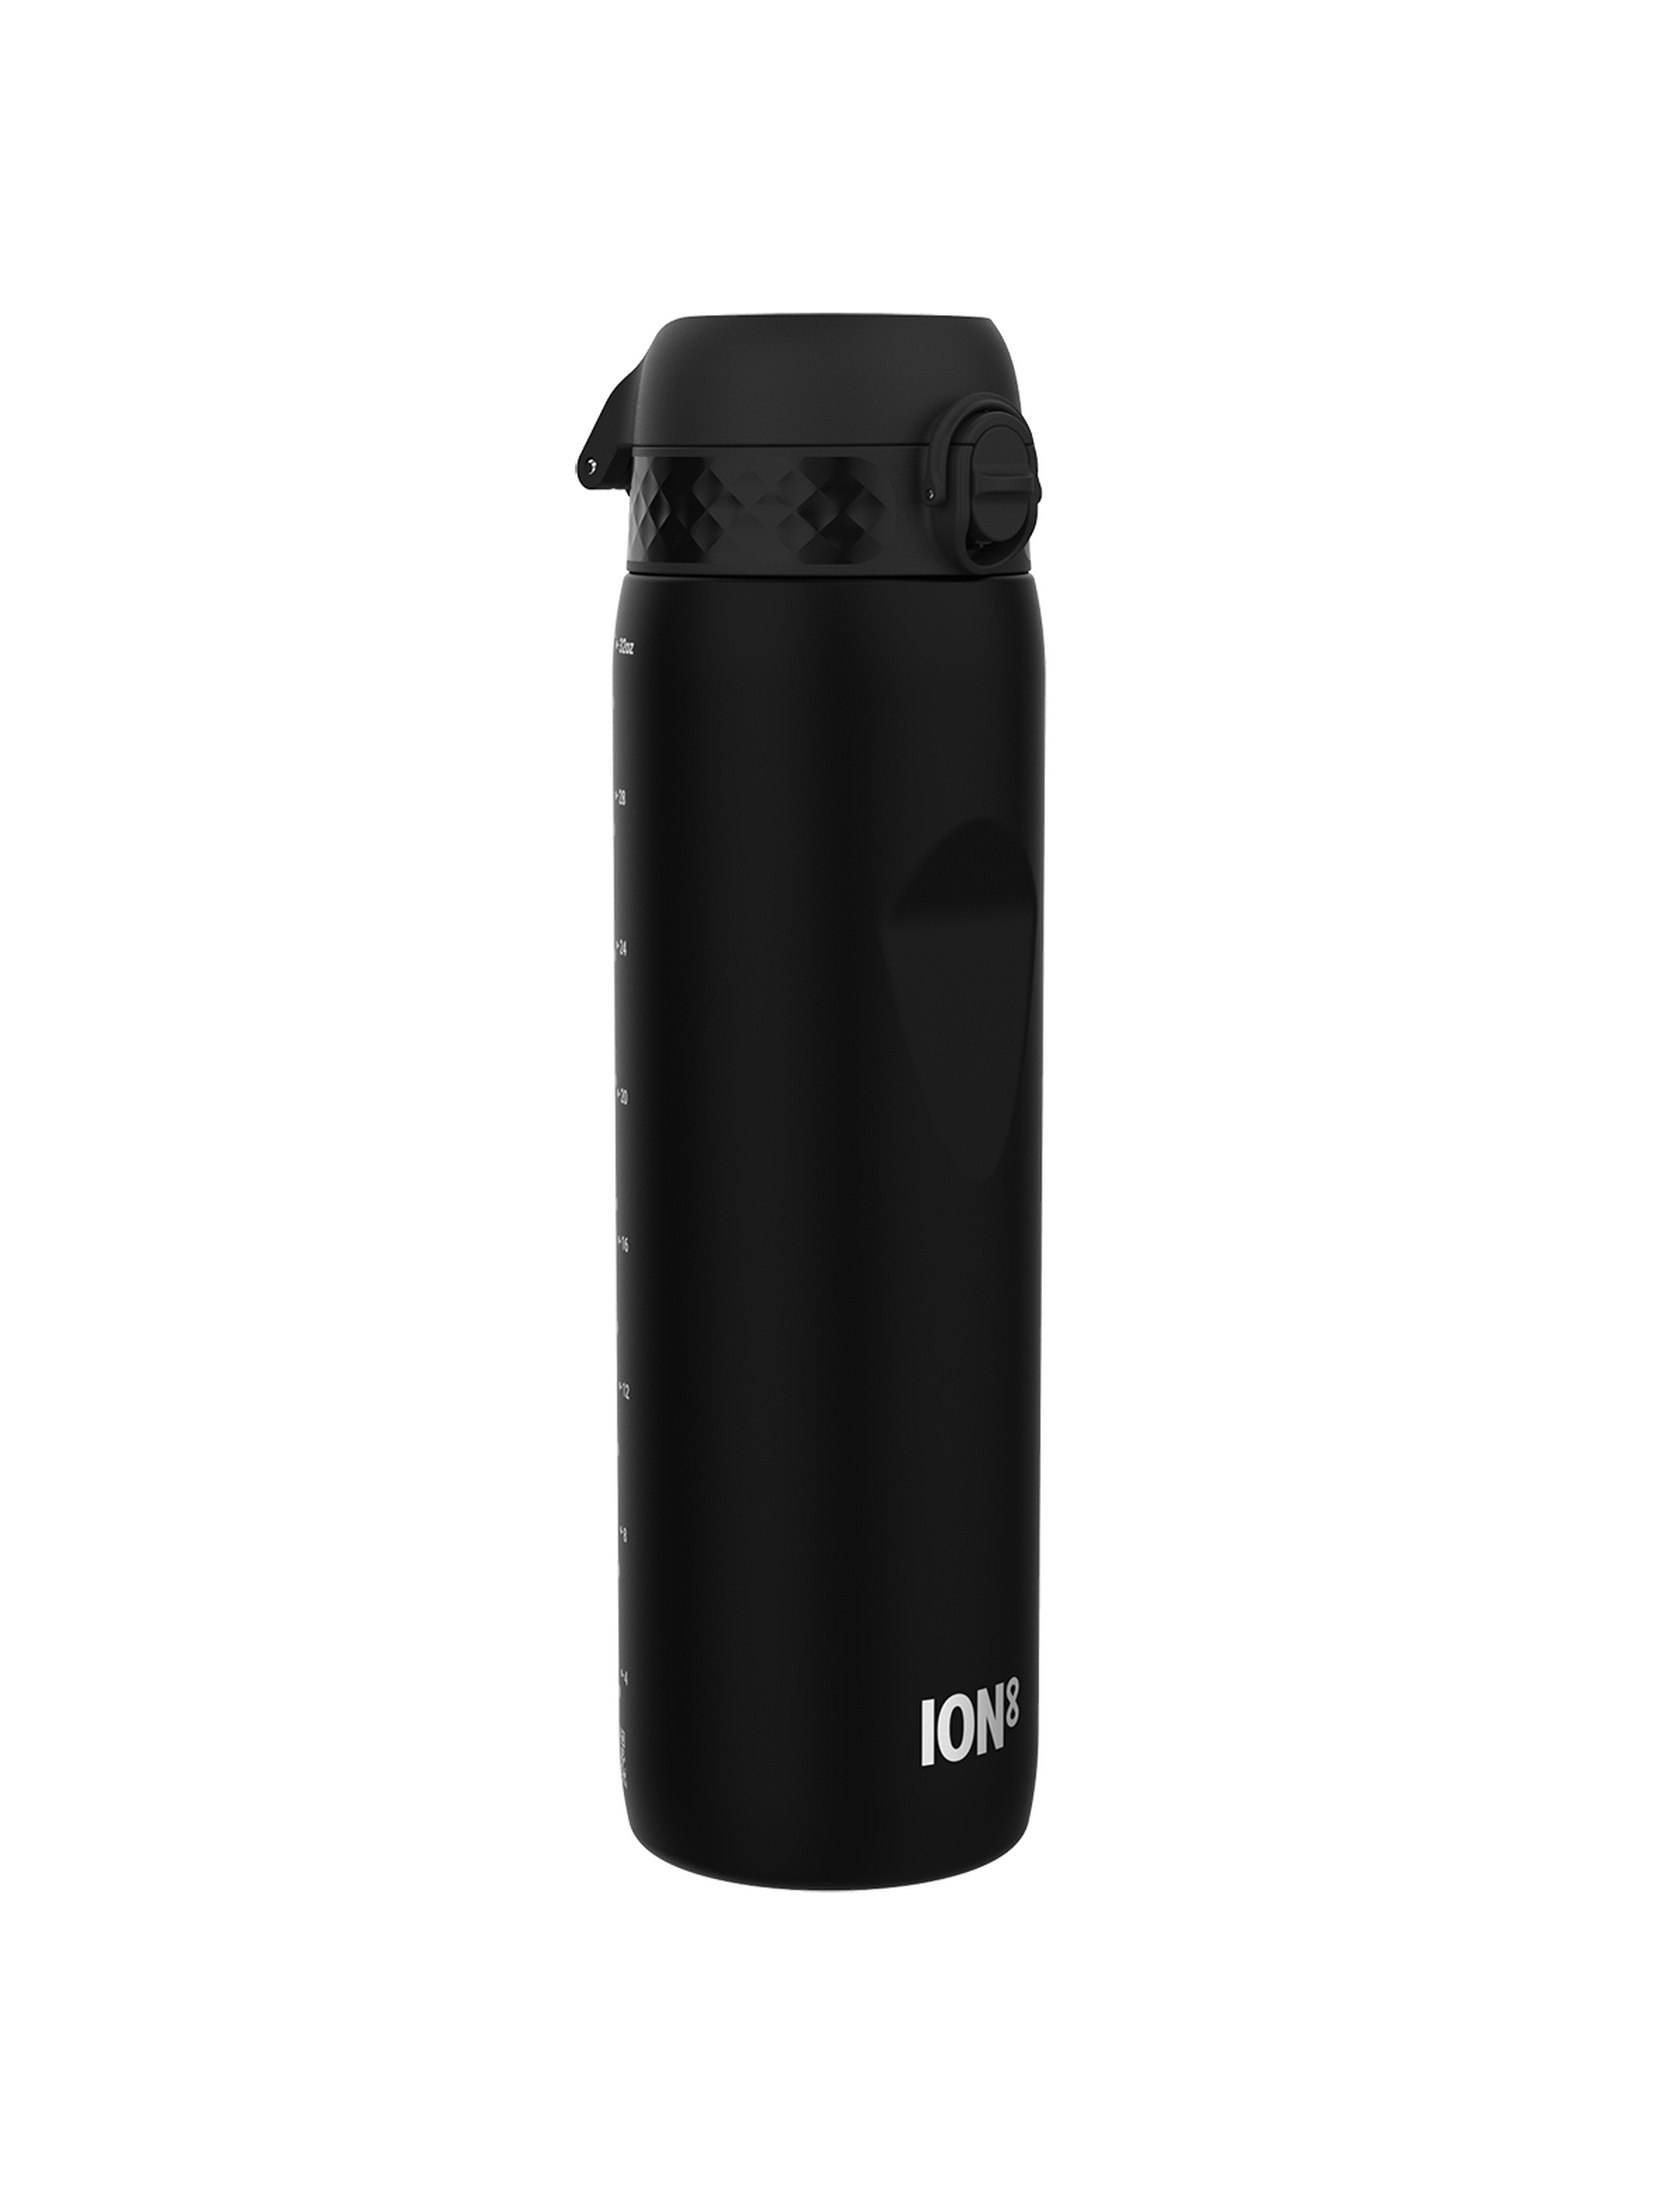 Butelka na wodę ION8 BPA Free Black 1200ml - czarna